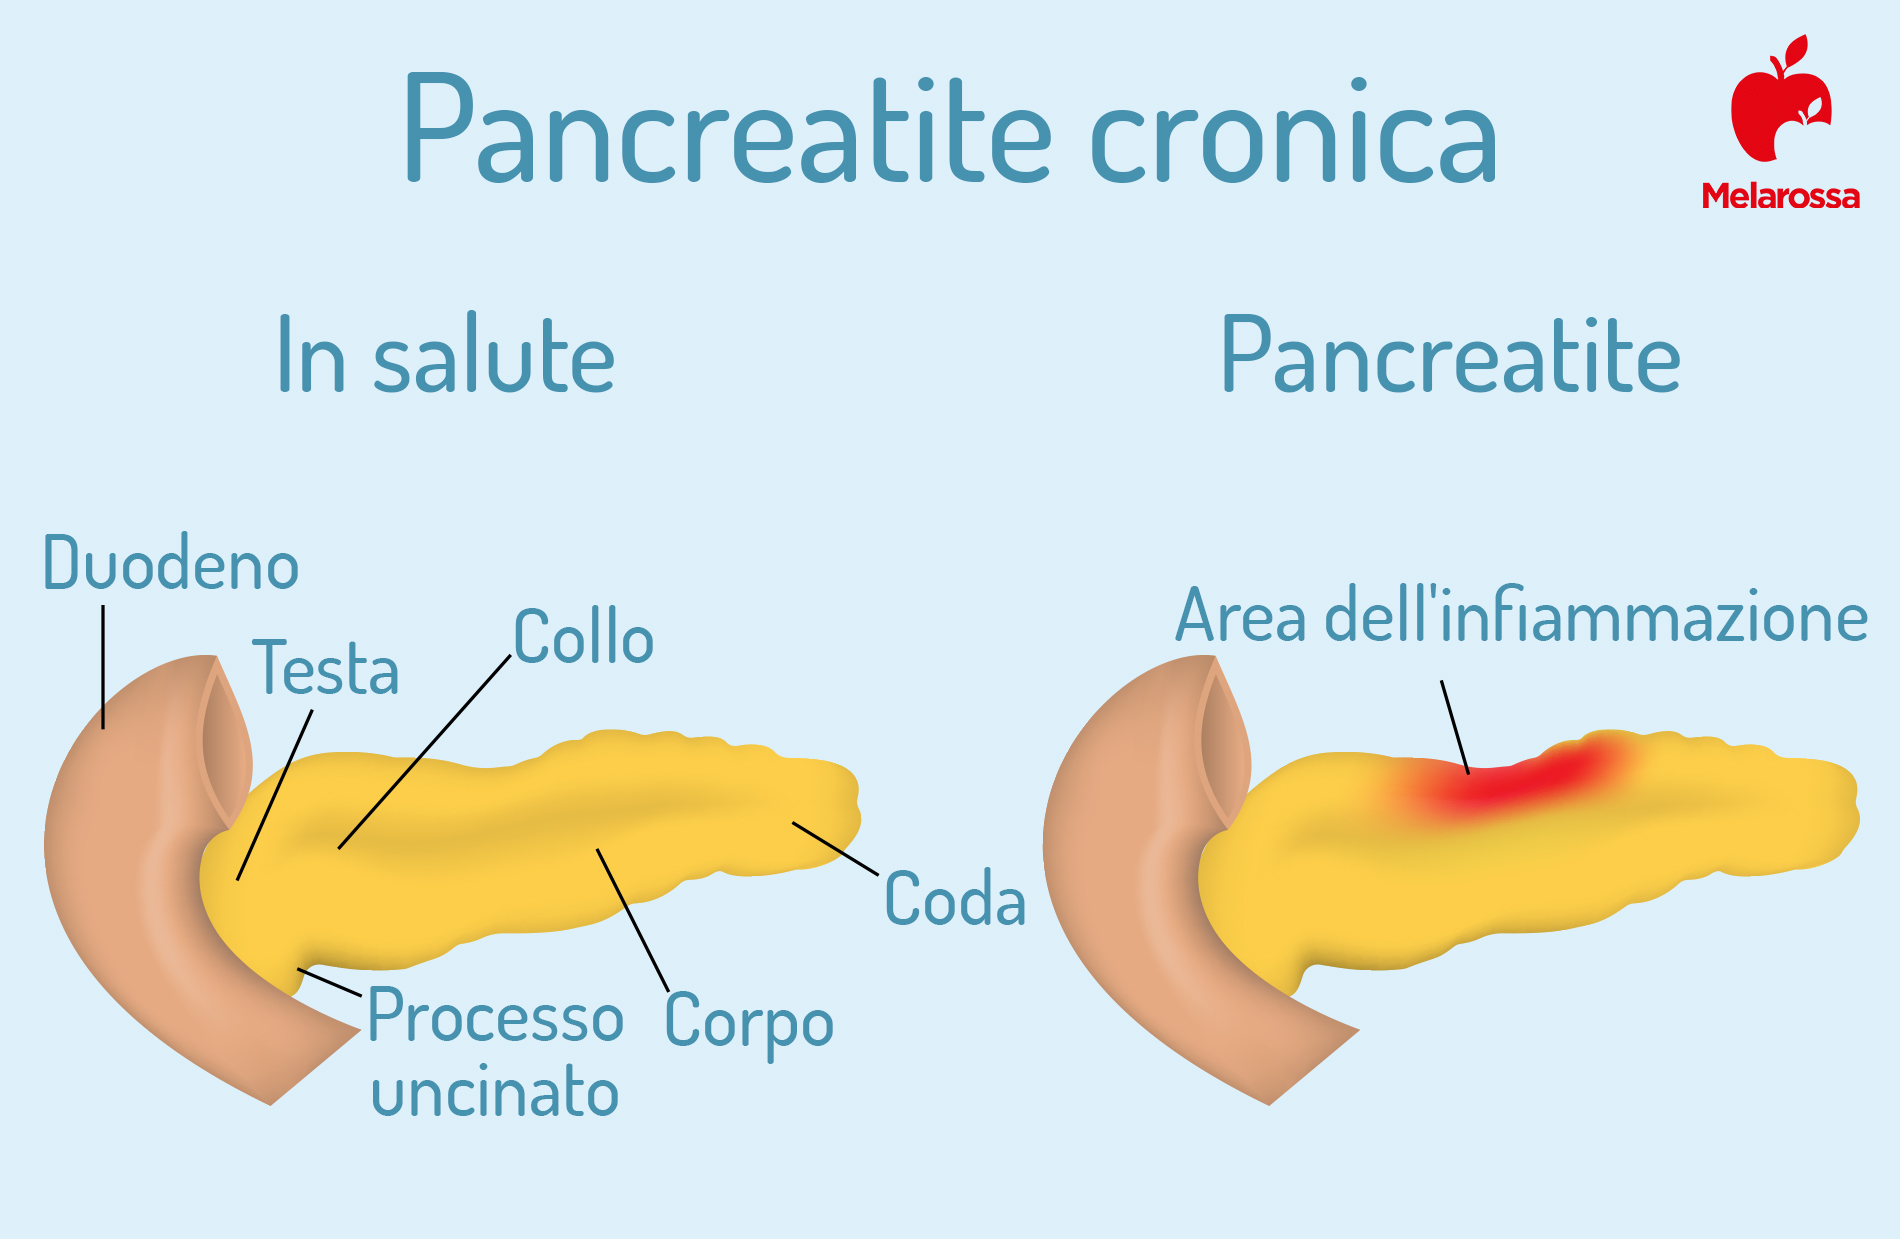 pancreatite cronica: cos'è